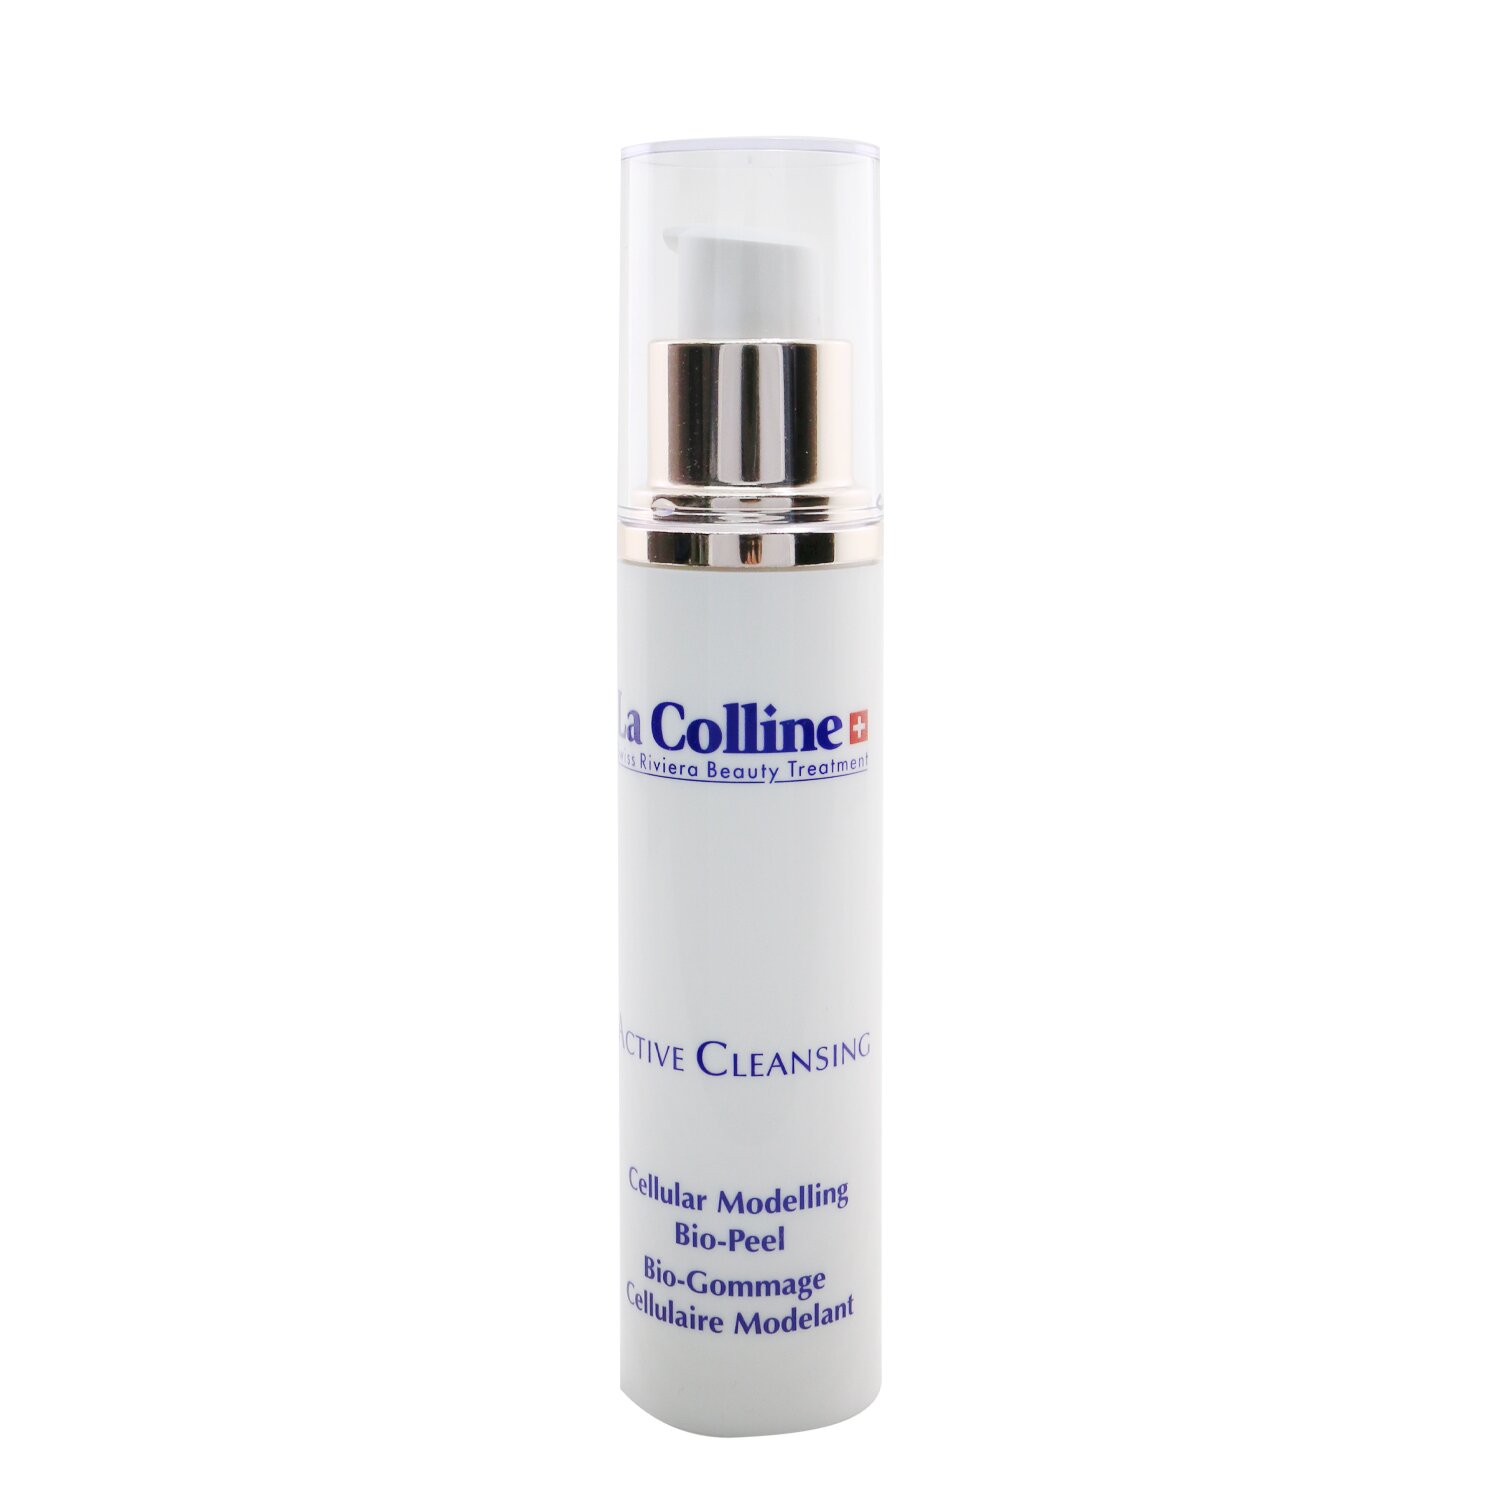 La Colline - Active Cleansing 全效潔淨系列 - 細胞生物同質去角質